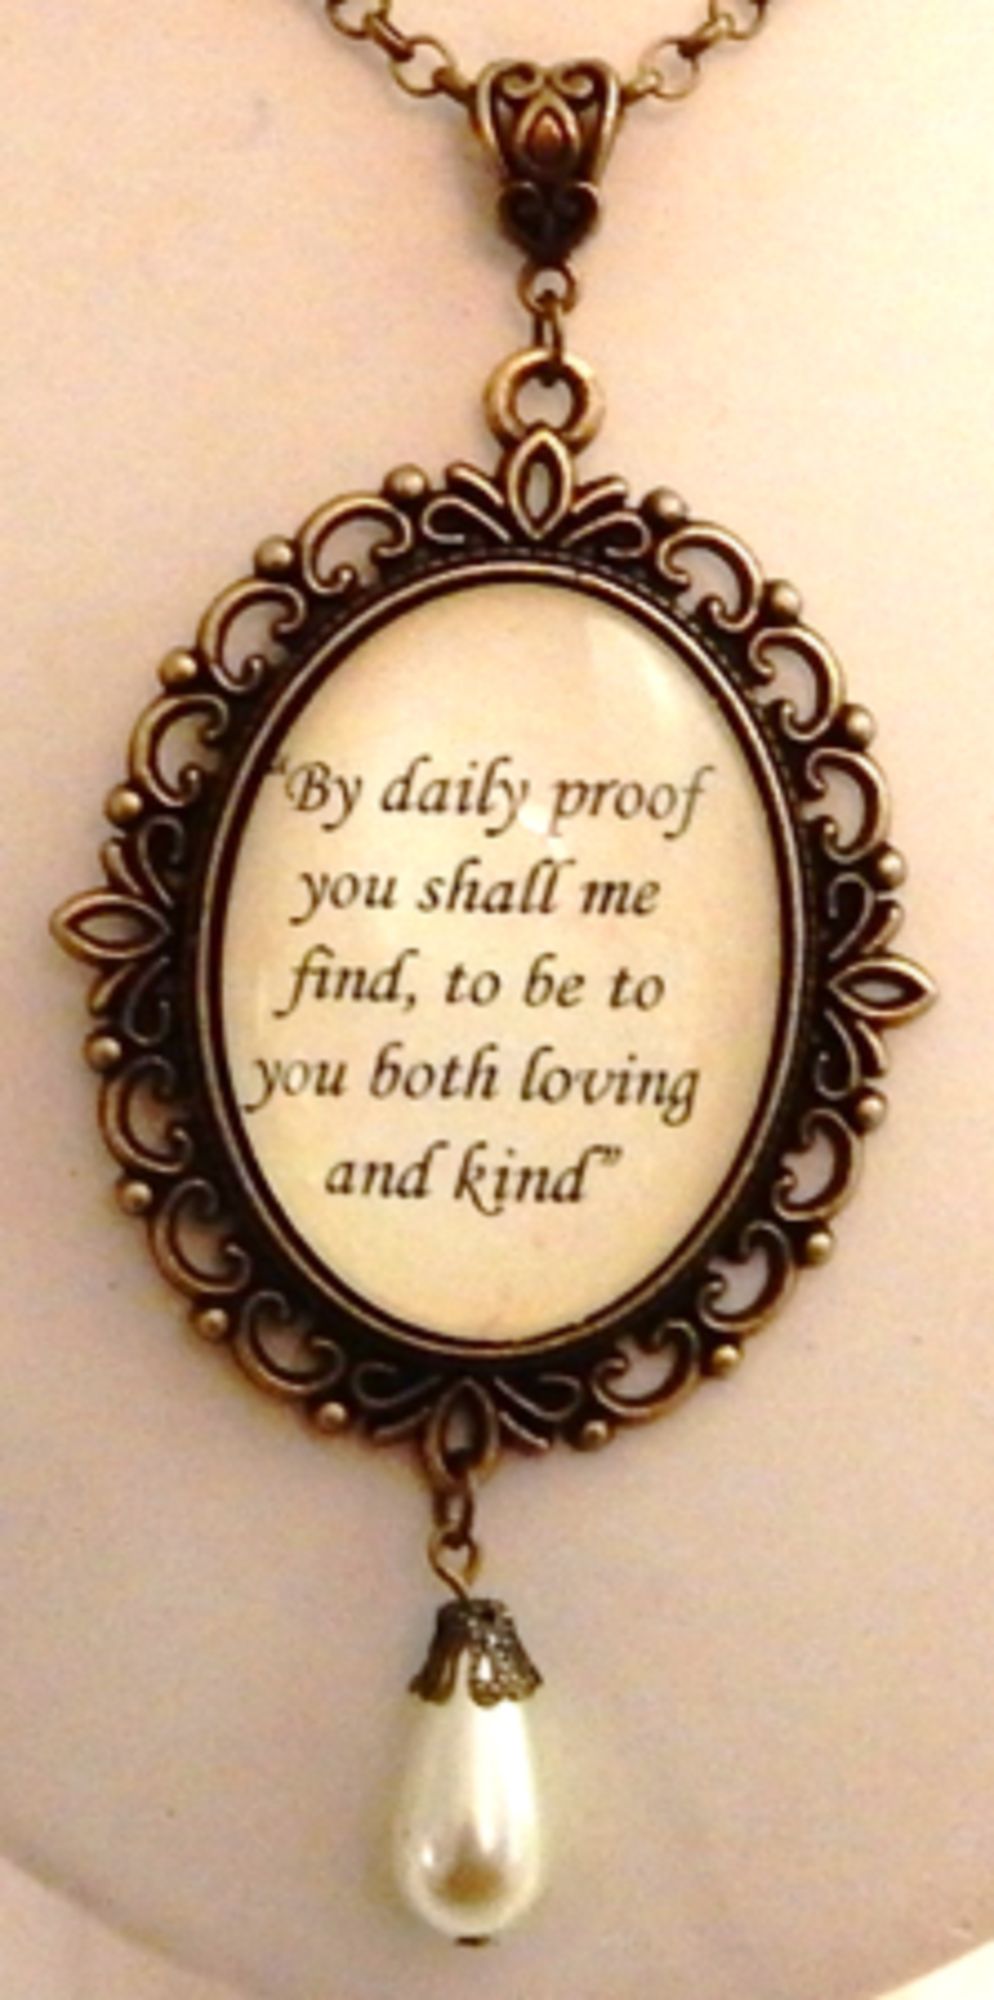 Queen Anne Boleyn romantic quote necklace